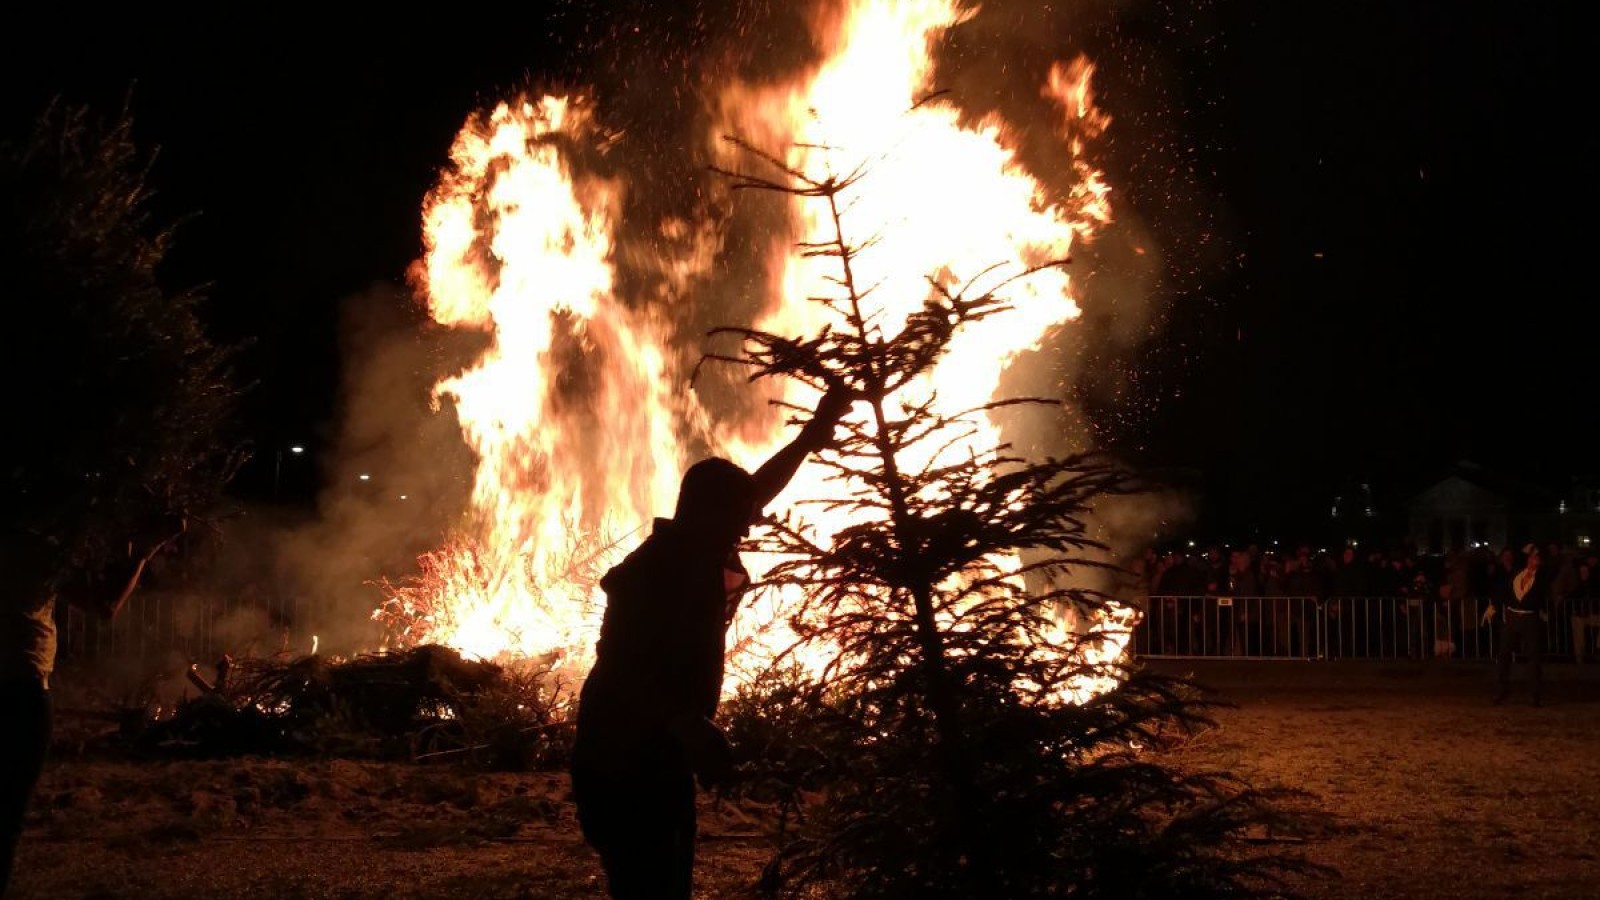 kerstboomverbranding kerstbomenverbranding kerst stock algemeen 